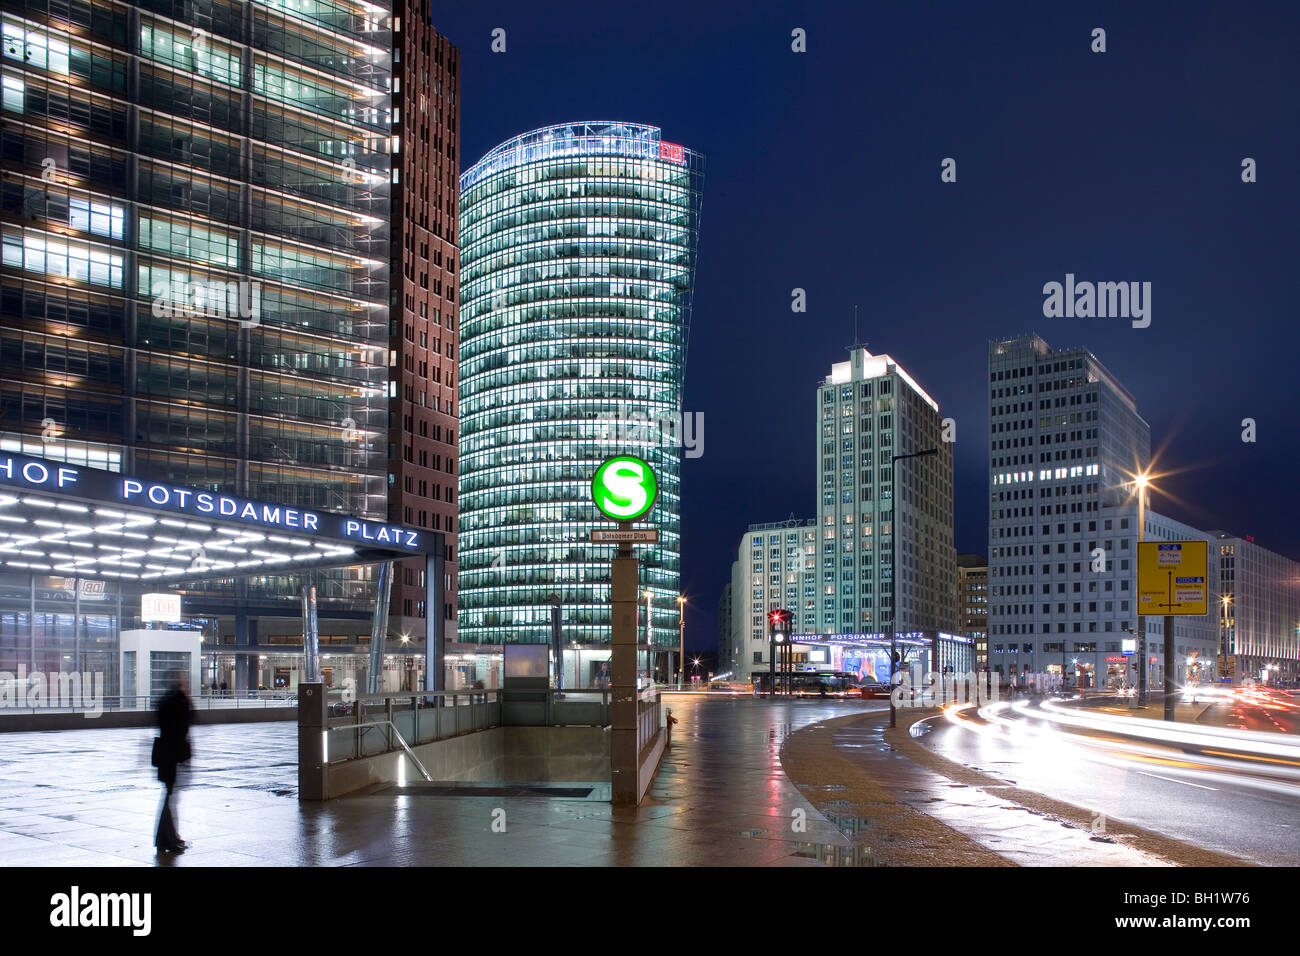 Potsdamer Platz en la noche de izquierda a derecha, Renzo Piano, Hans Kollhoff Torre Torre, Bahn Tower, Beisheim Center, Towe Delbrueck Foto de stock